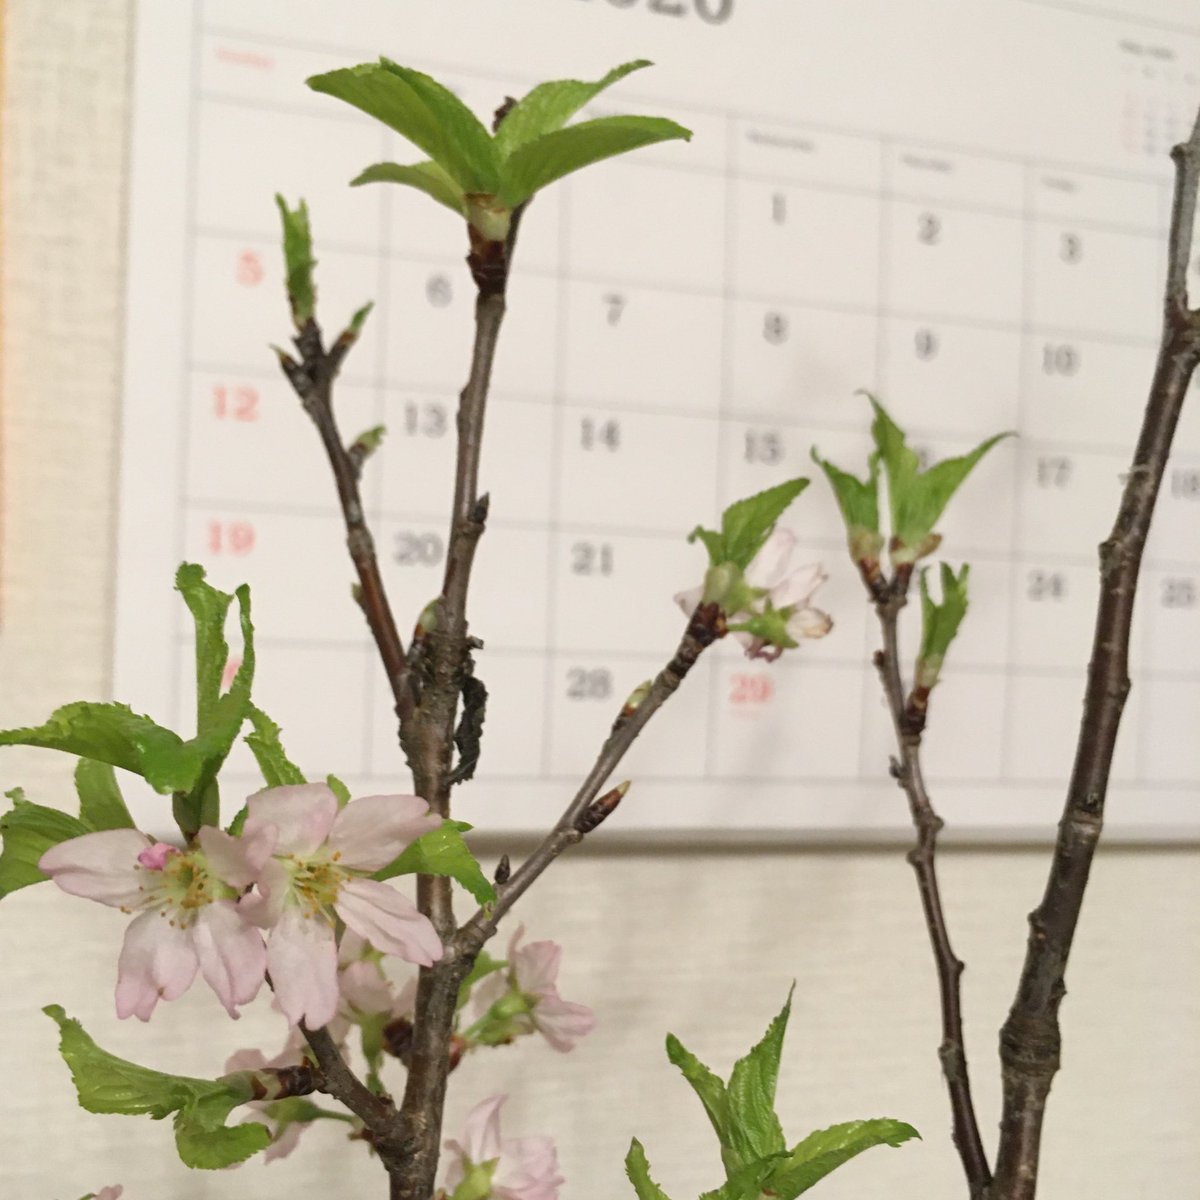 Ayako めっちゃ葉が出てきた 桜の枝 強いな T Co Fqfpzgqj8i Twitter